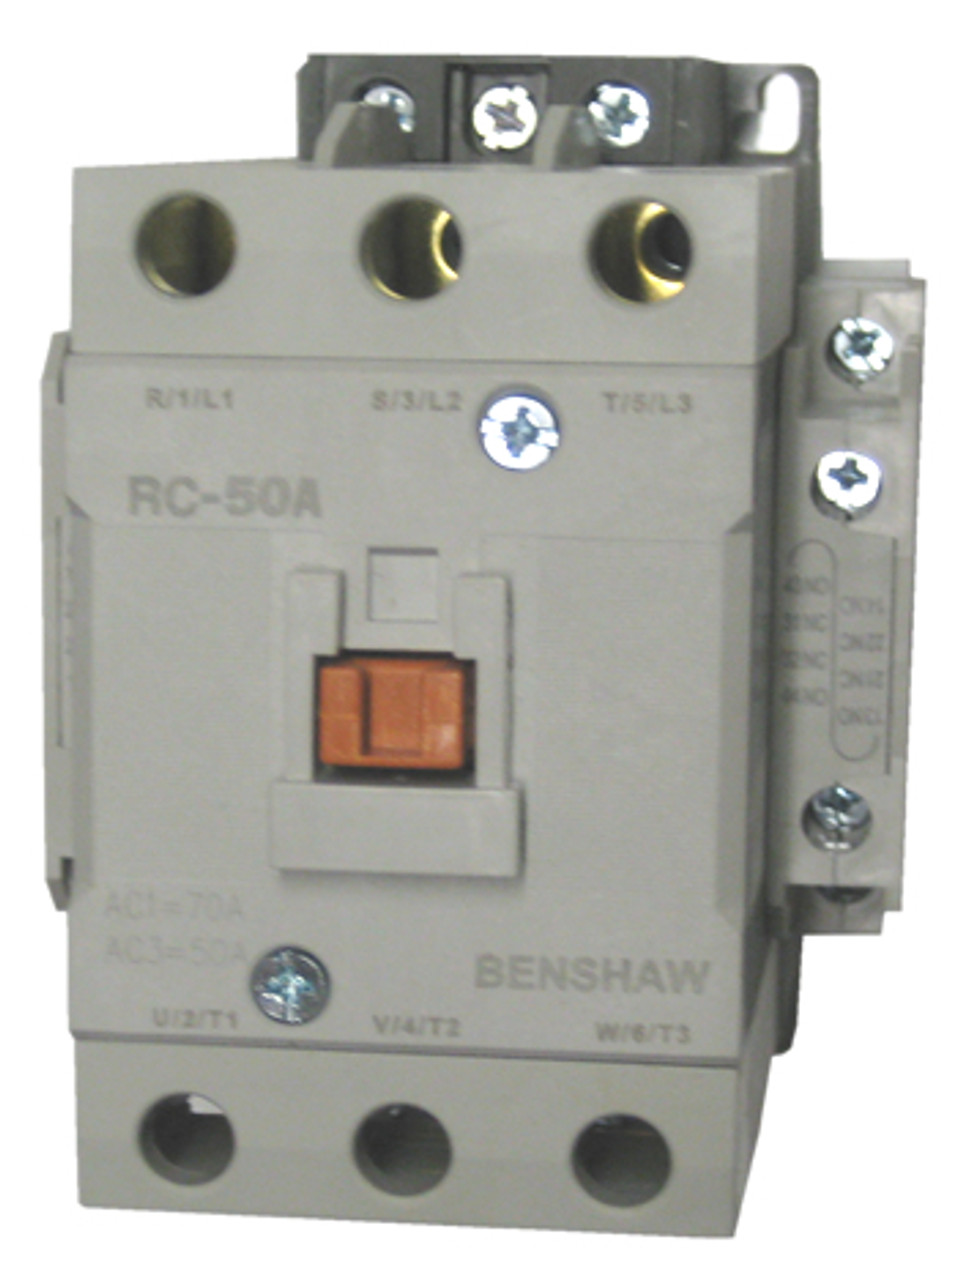 Benshaw RC-50A-56AC220 contactor